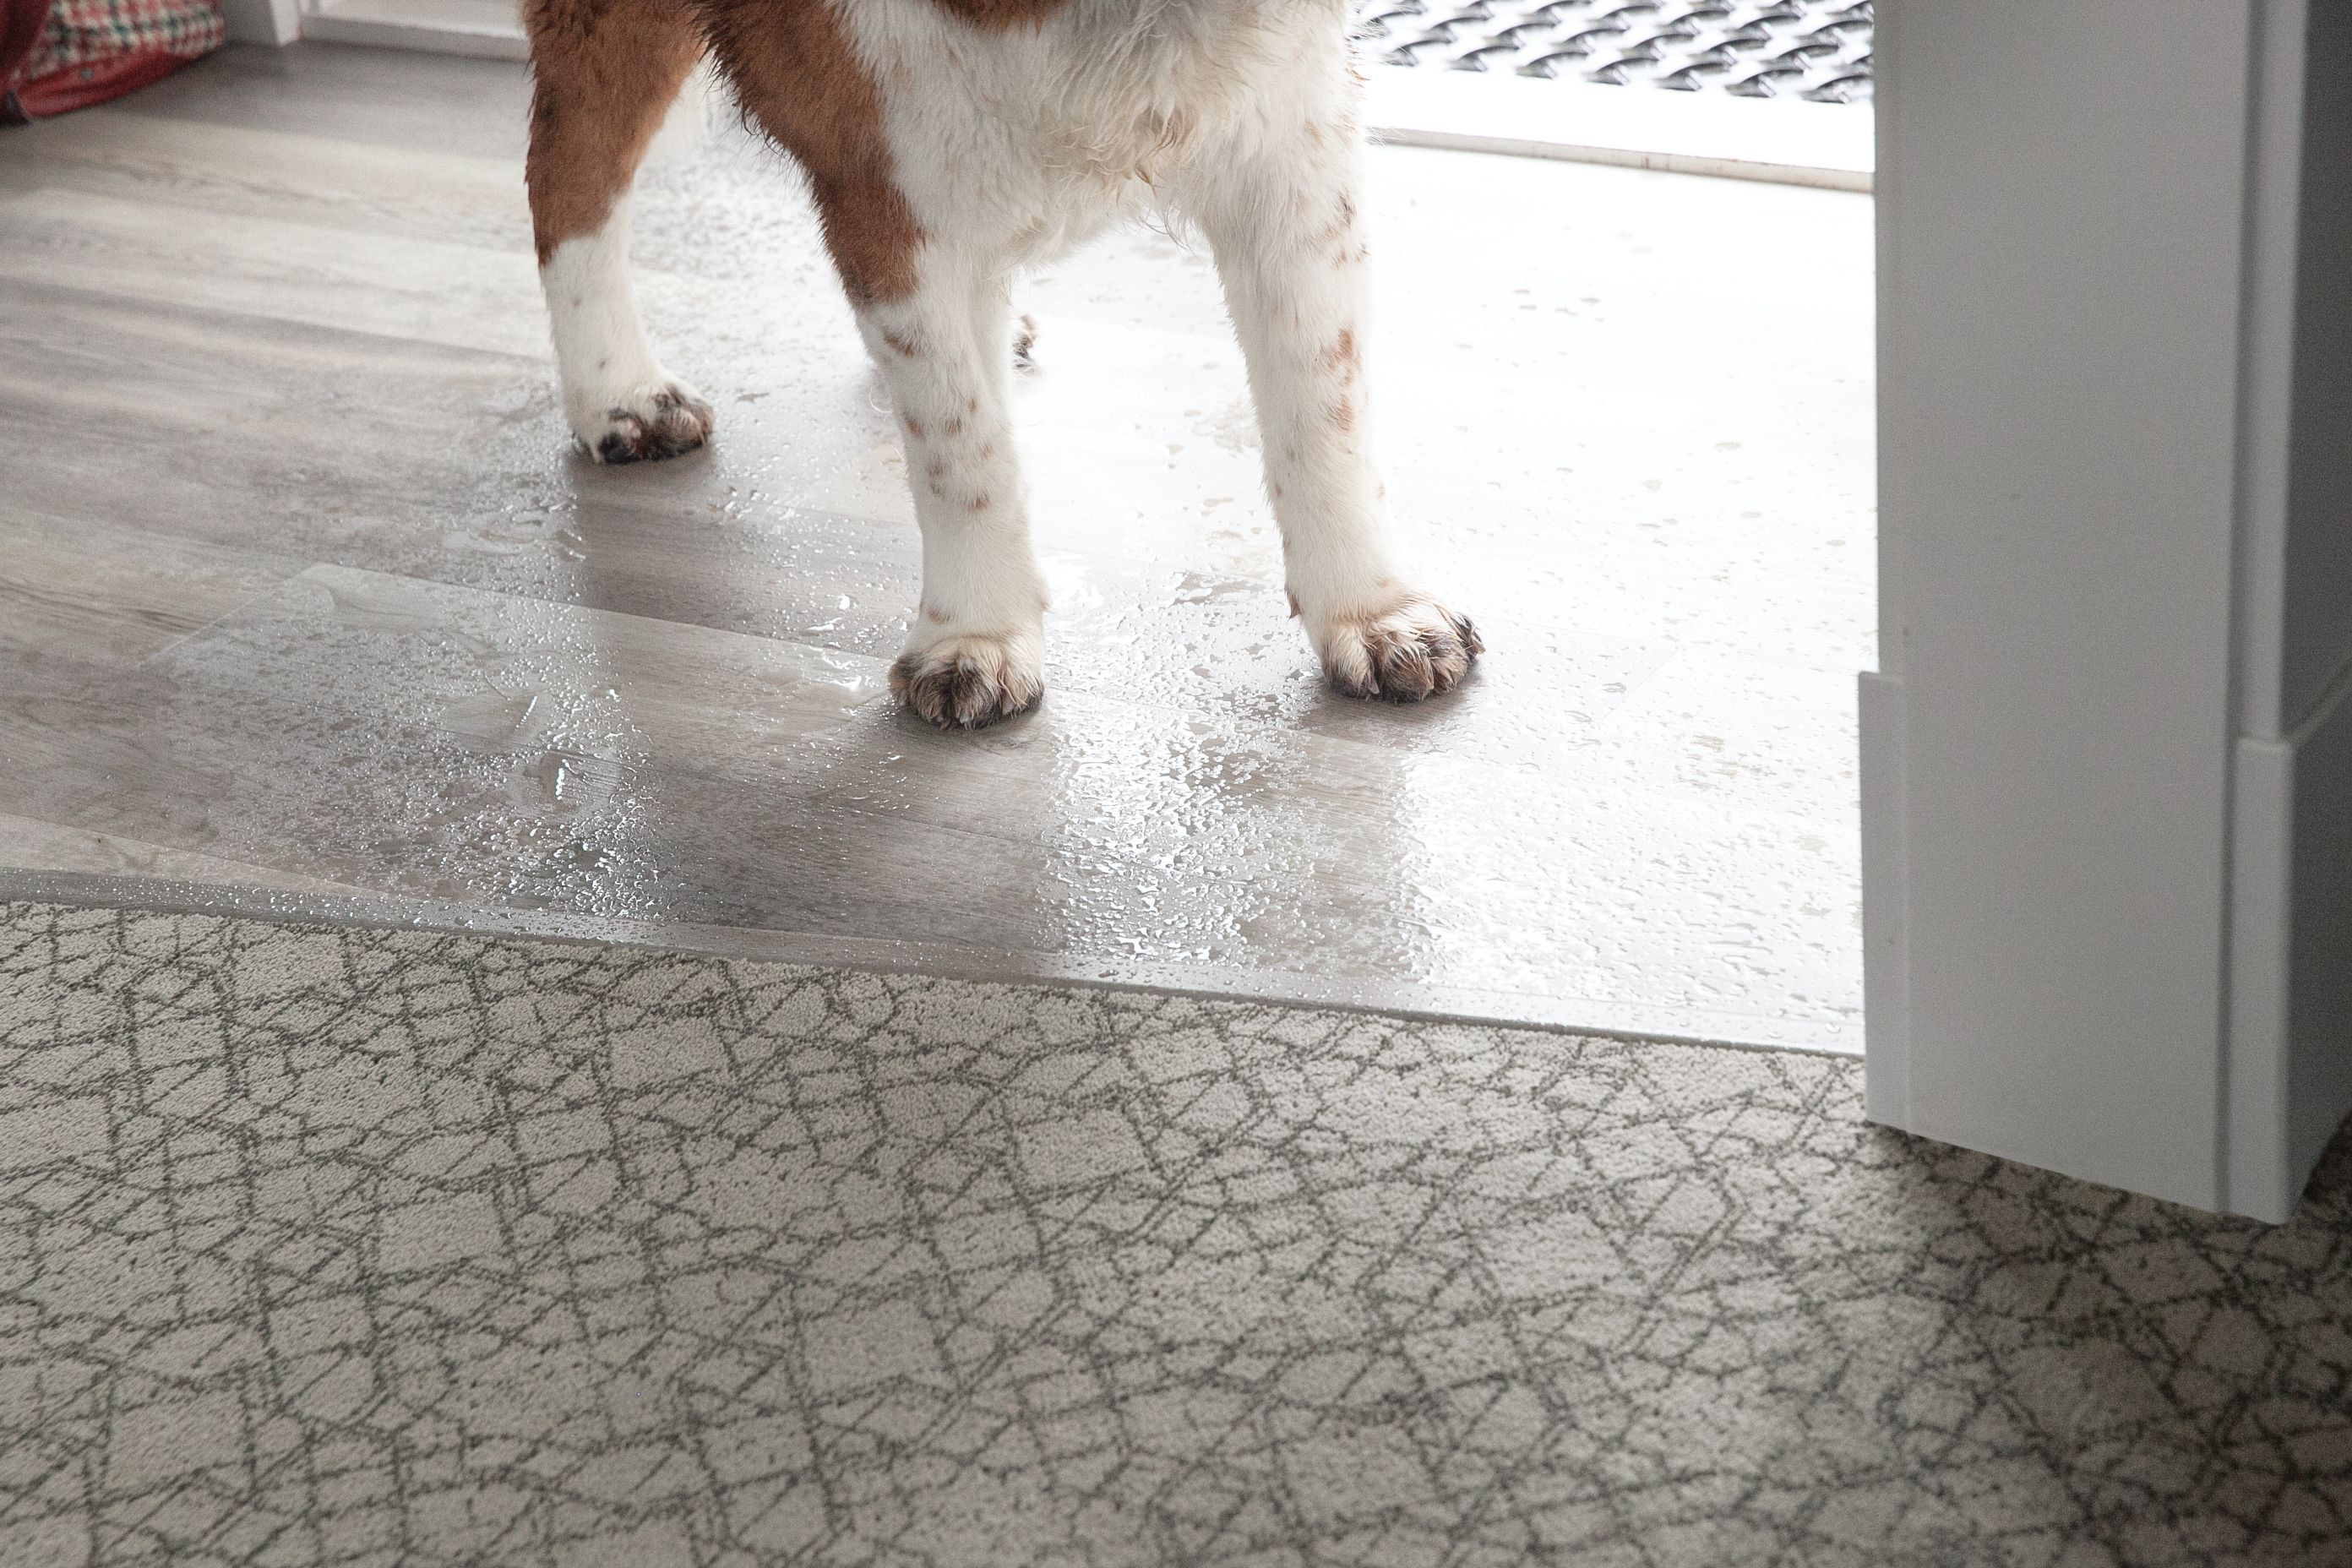 Wet dog standing on hardwood floor AND carpet